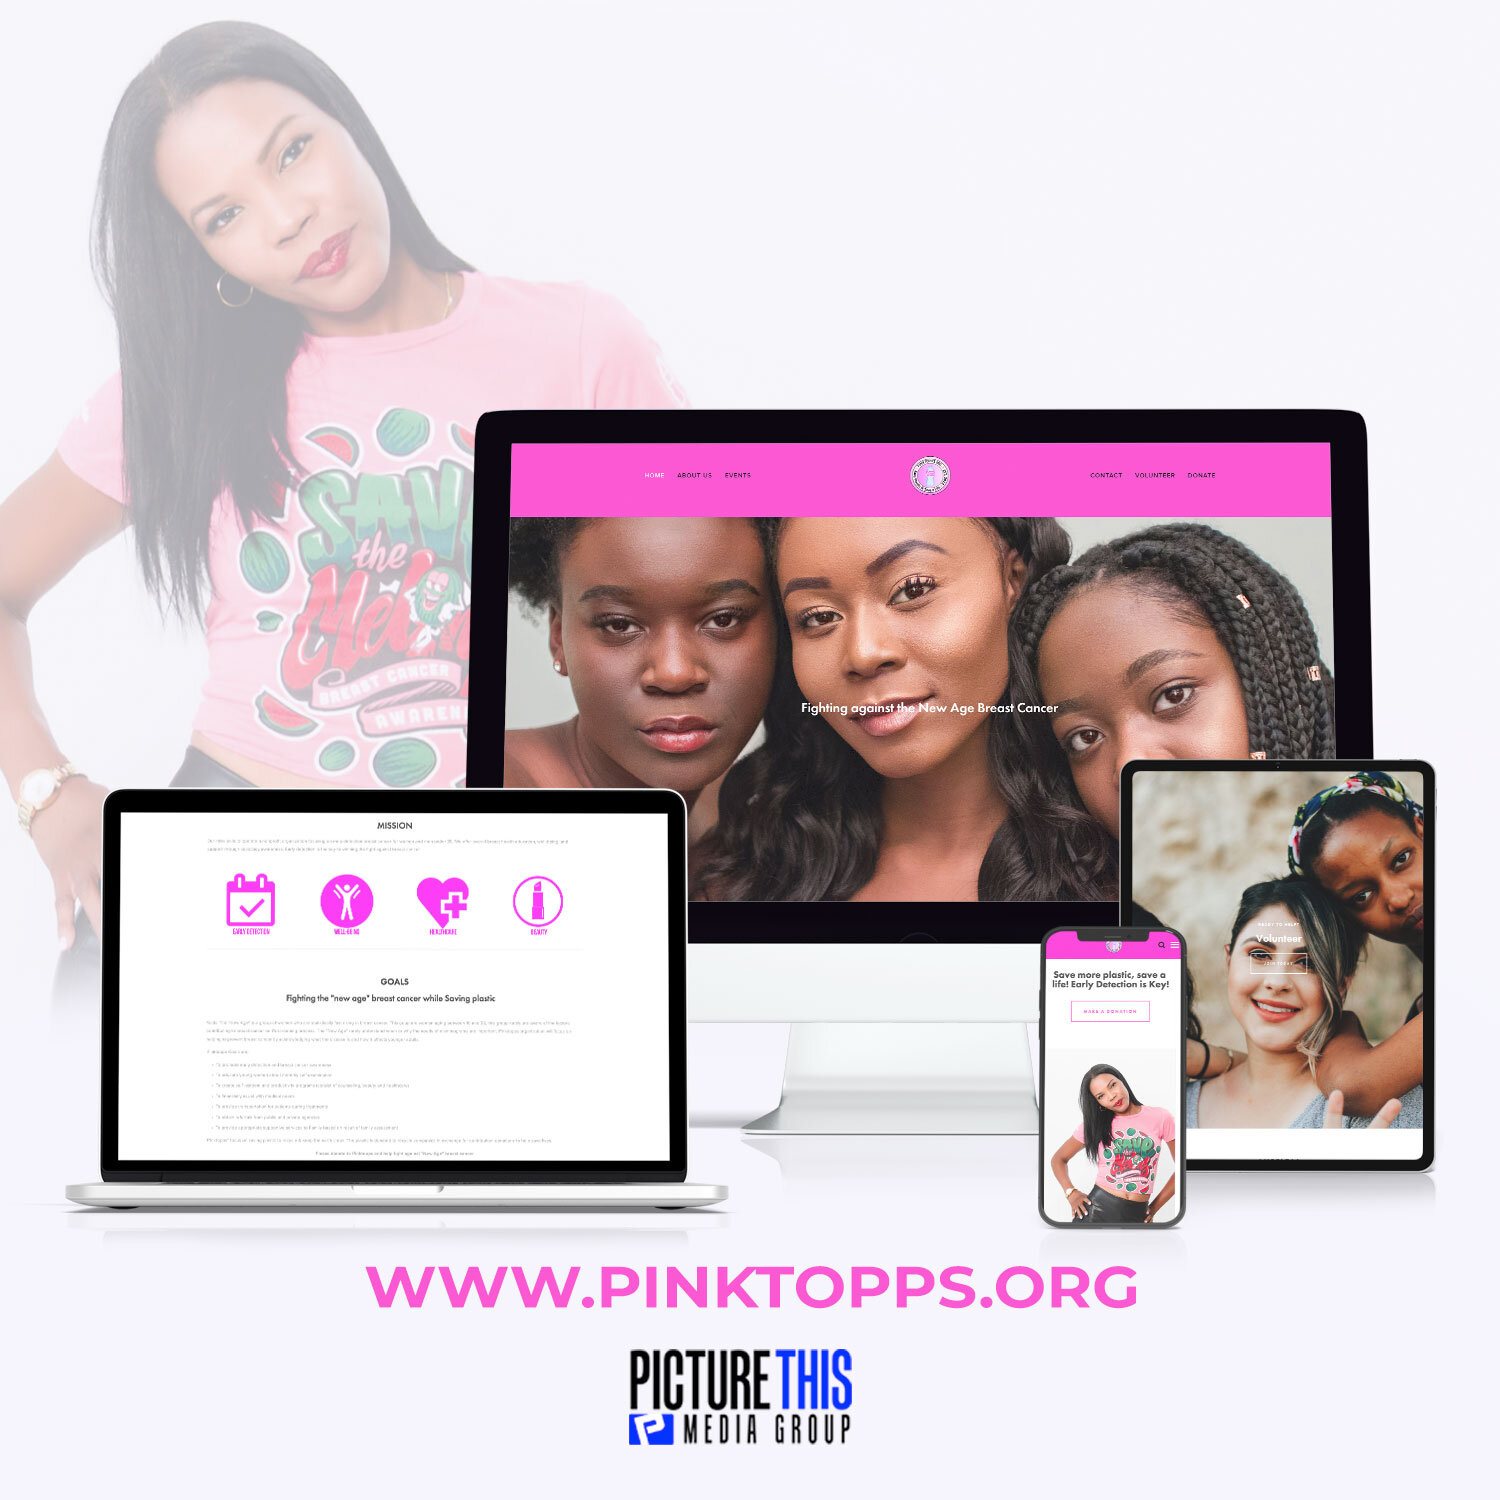 pinktopps_websiteFlyer.jpg